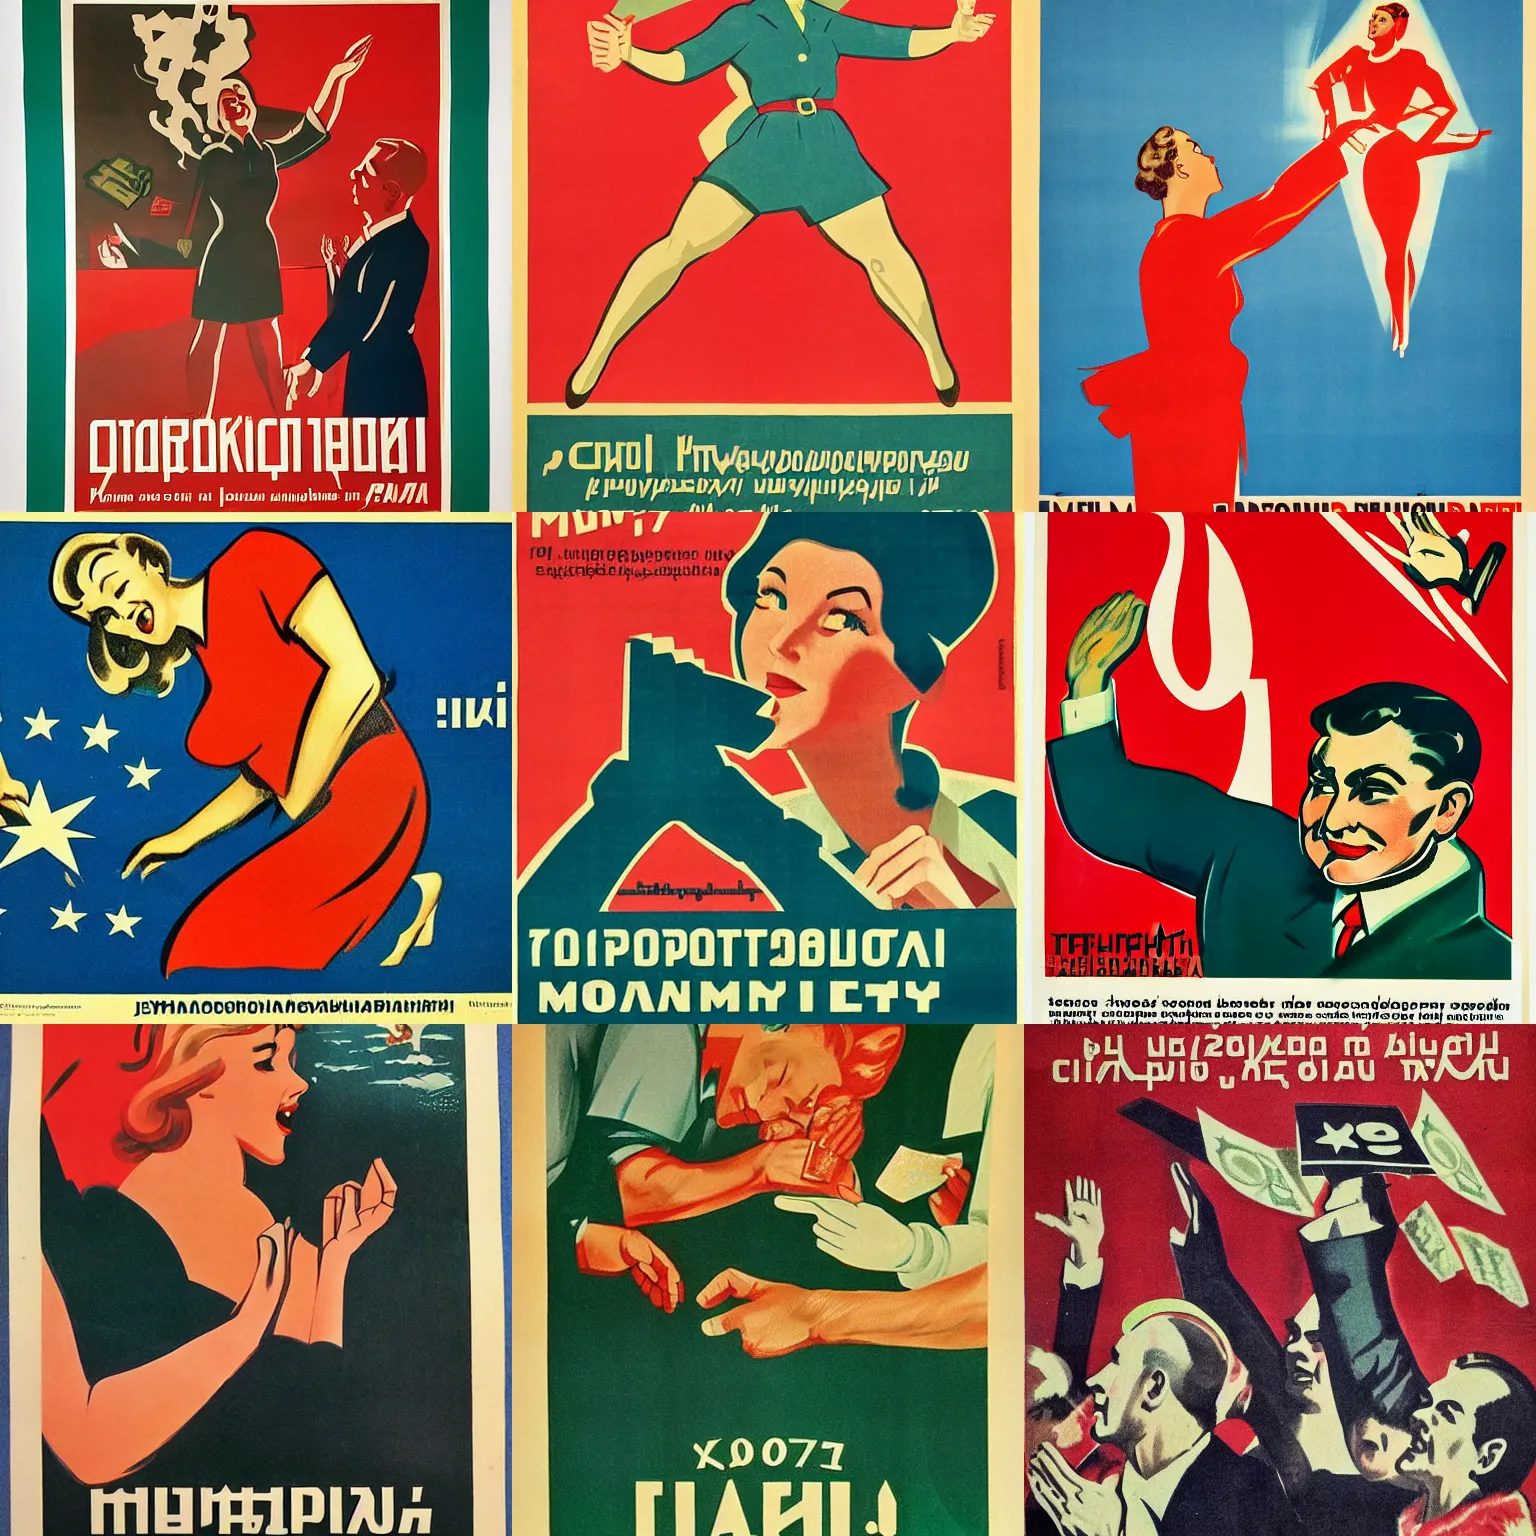 Prompt: 1 9 5 0 soviet propaganda poster of praising money and capitalism